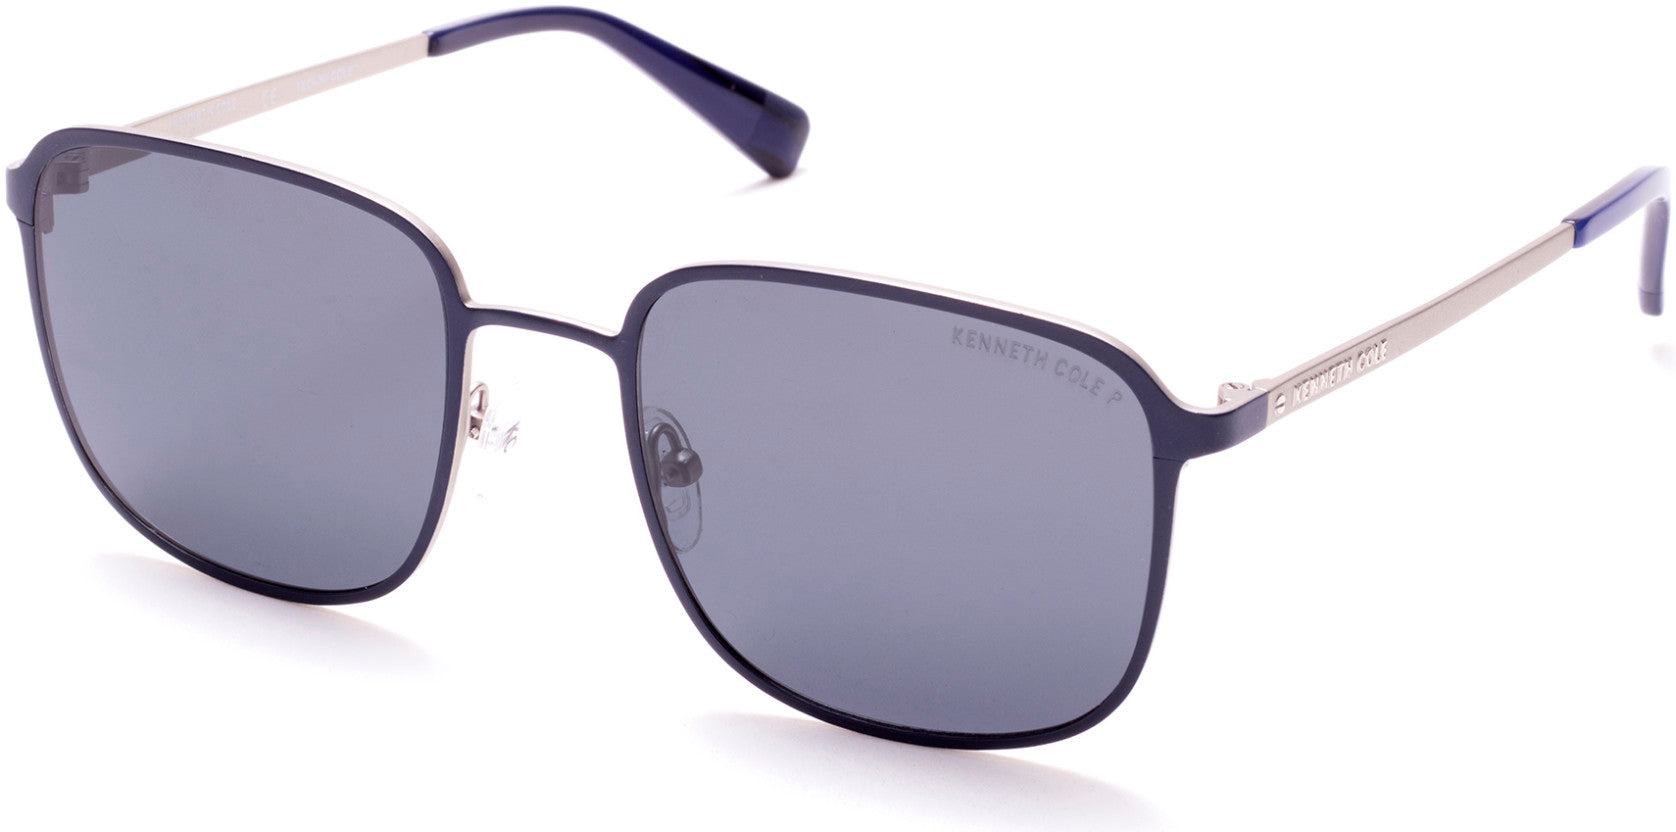 Kenneth Cole New York,Kenneth Cole Reaction KC7231 Geometric Sunglasses 91D-91D - Matte Blue / Smoke Polarized Lenses